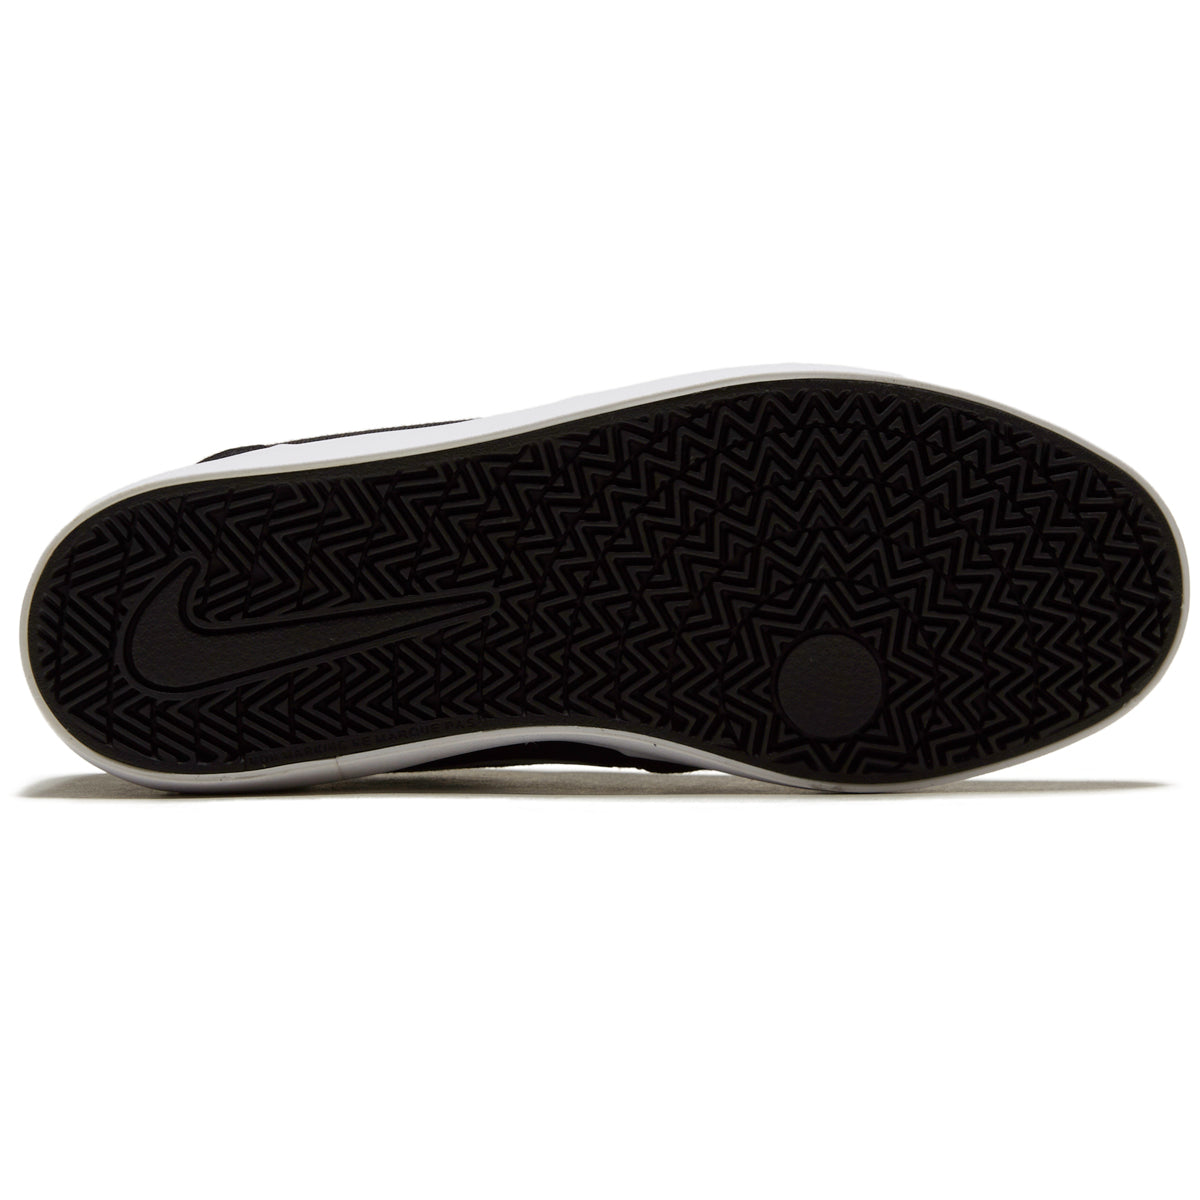 Nike SB Youth Check Canvas Shoes - Black/White image 4